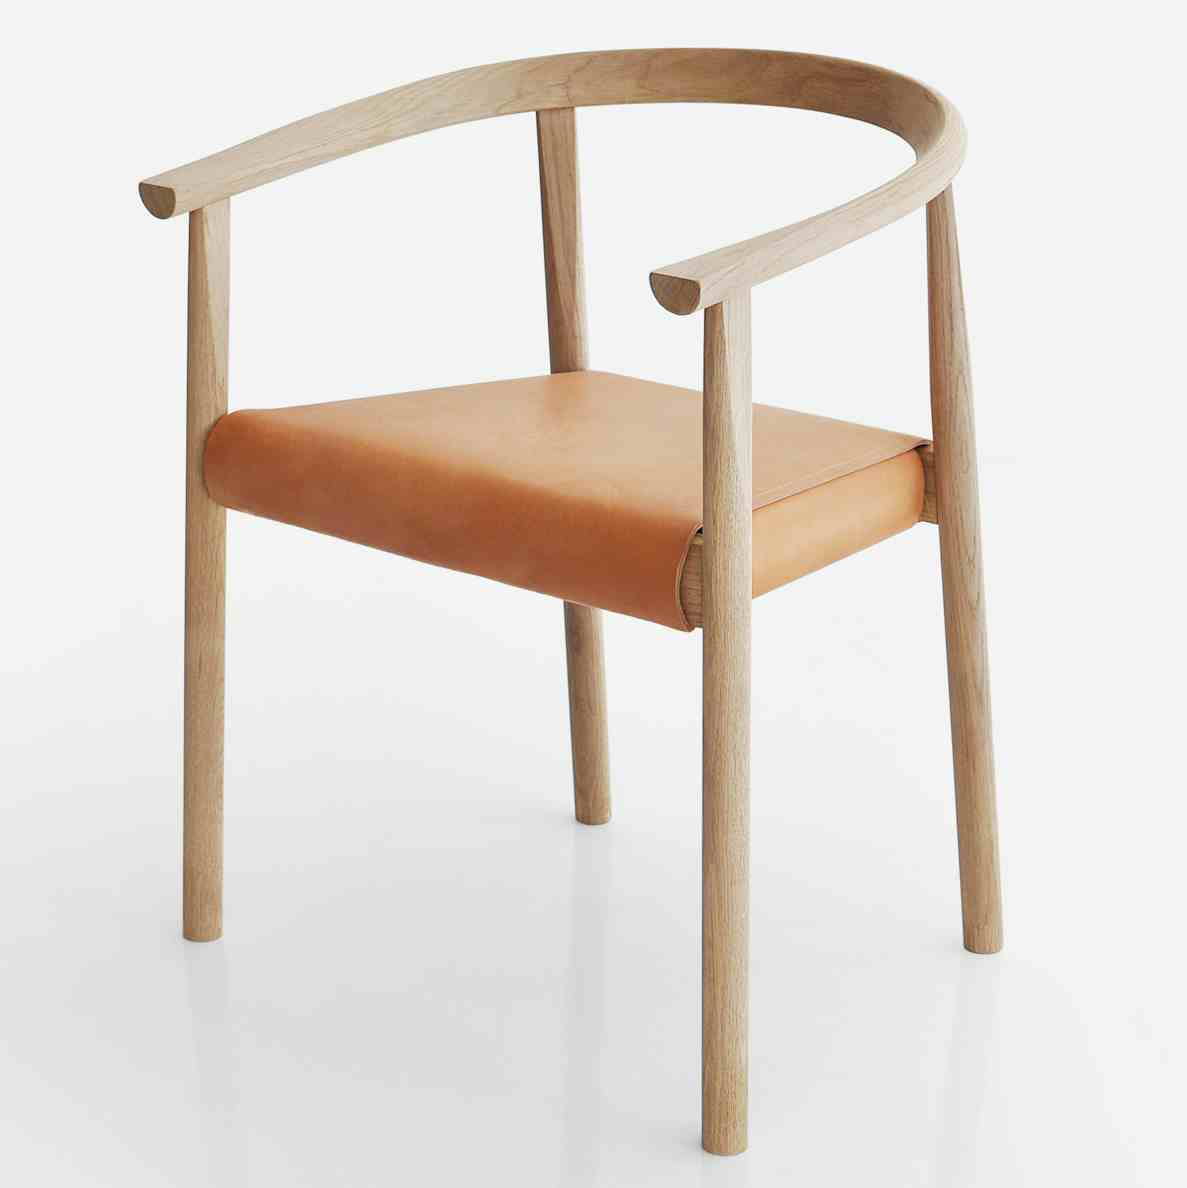 Bensen furniture tokyo chair cognac angle haute living